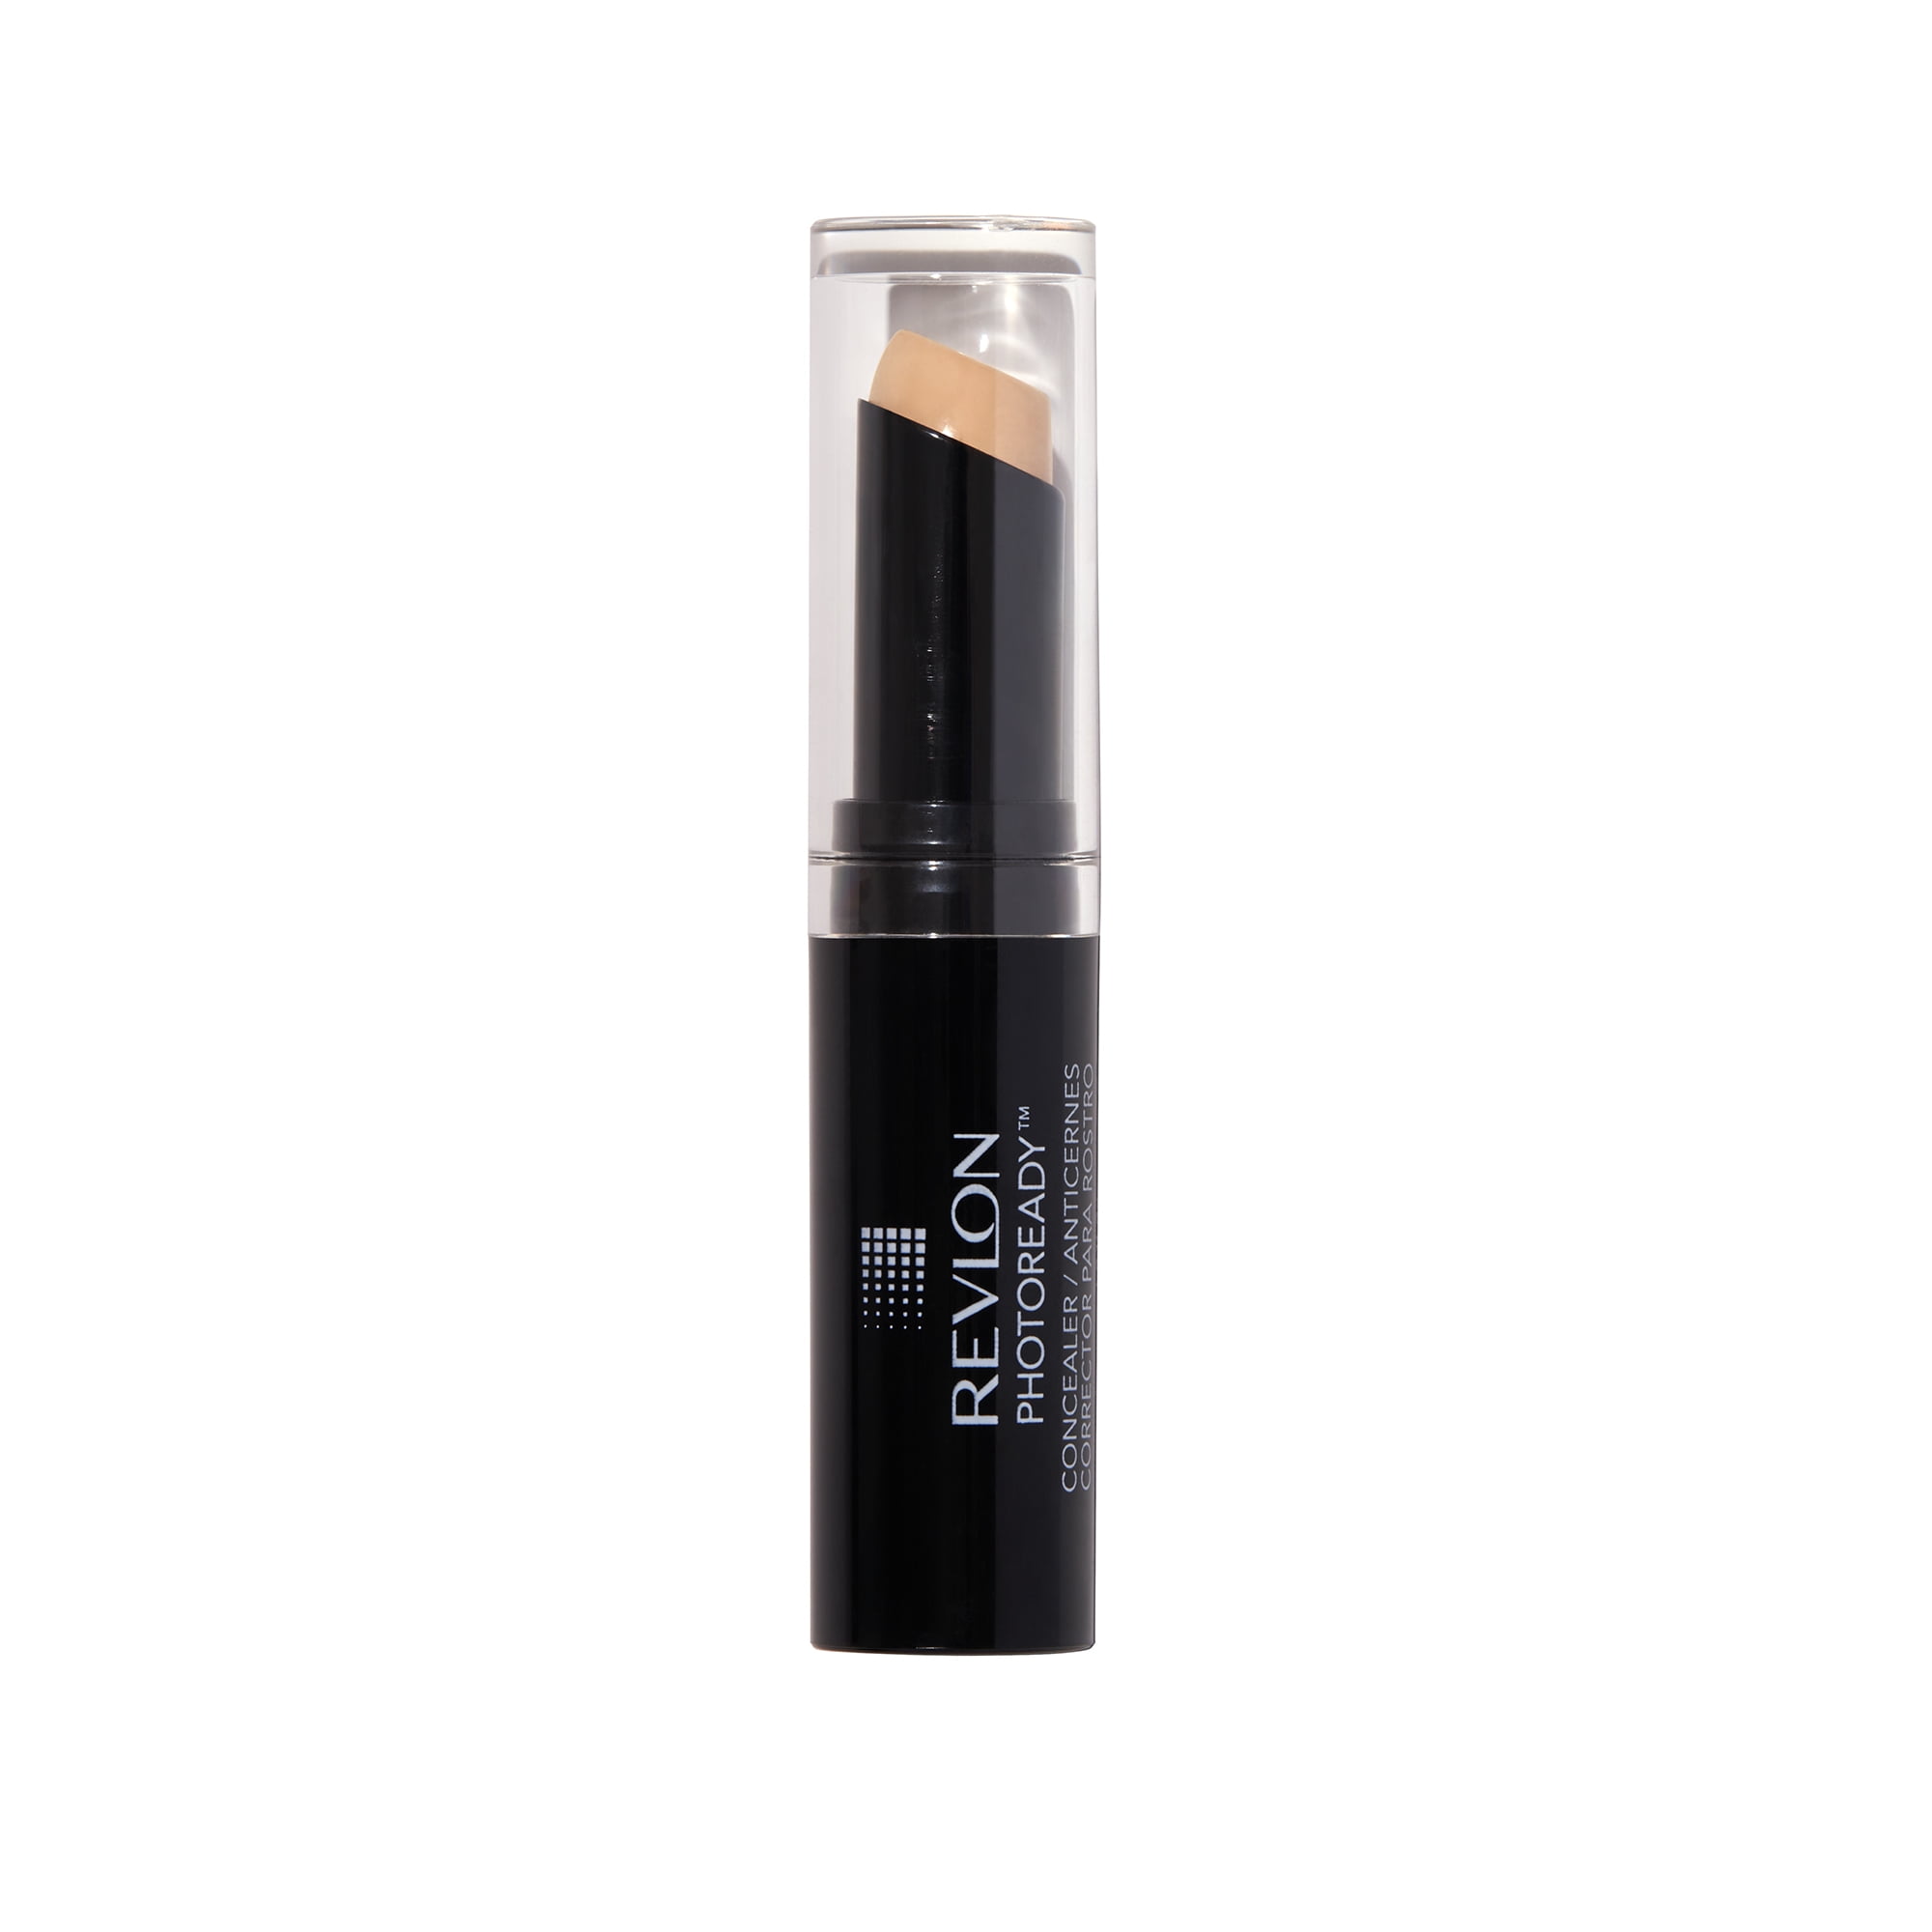 Revlon PhotoReady Concealer Stick, Creamy Medium Coverage Color Correcting Face Makeup, 002 Light, 0.11 oz